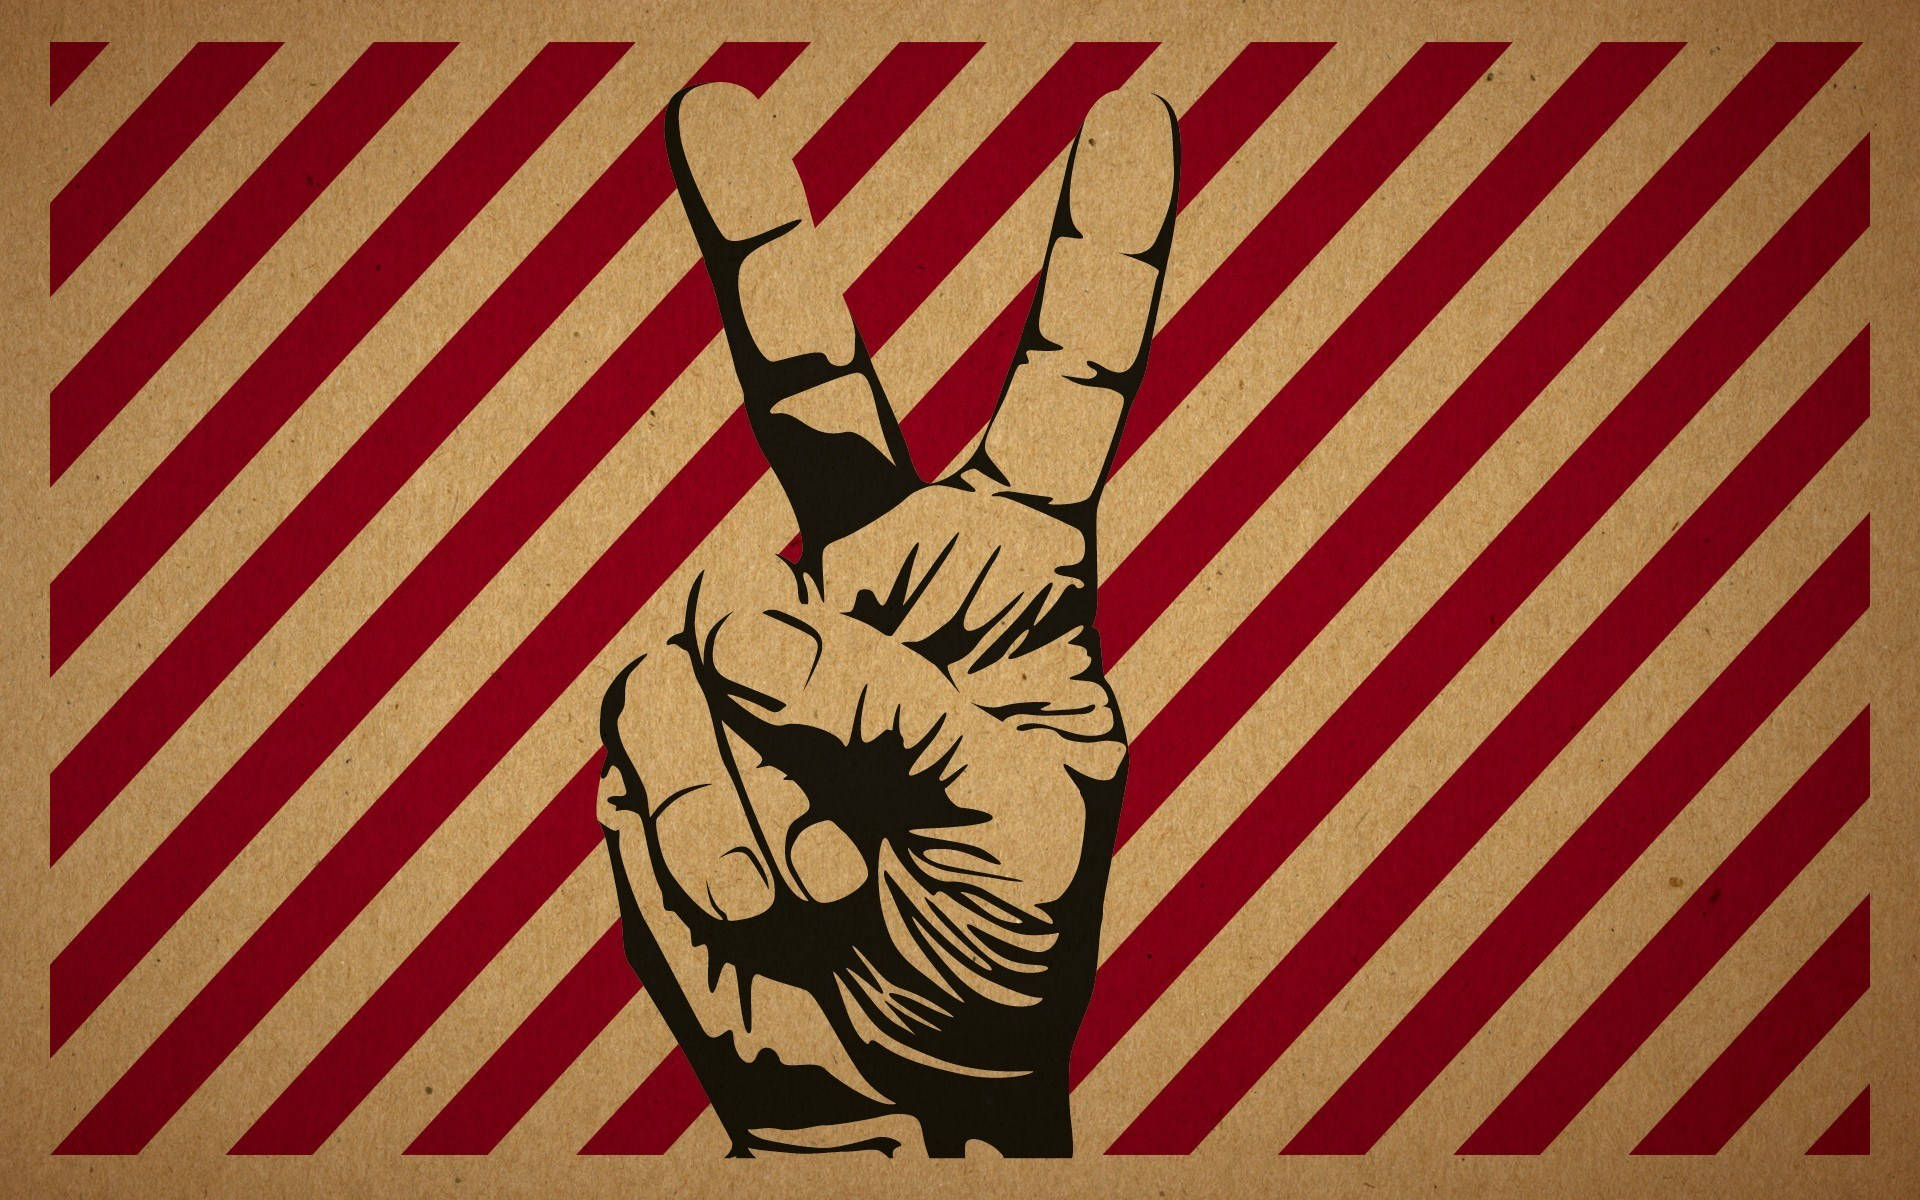 Retro Peace Hand Sign Picture